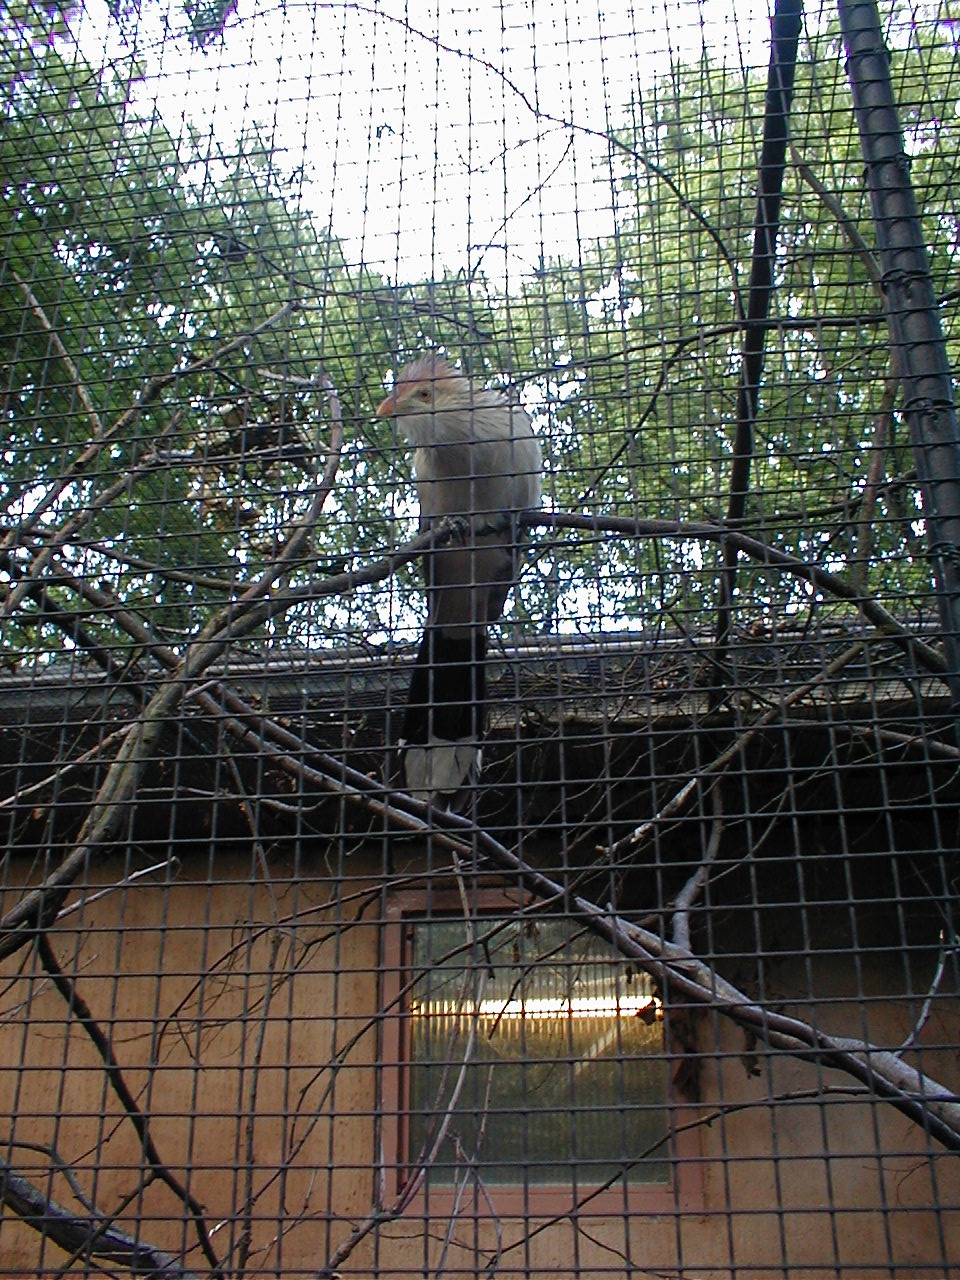 tropical bird in a cage prison captive dario